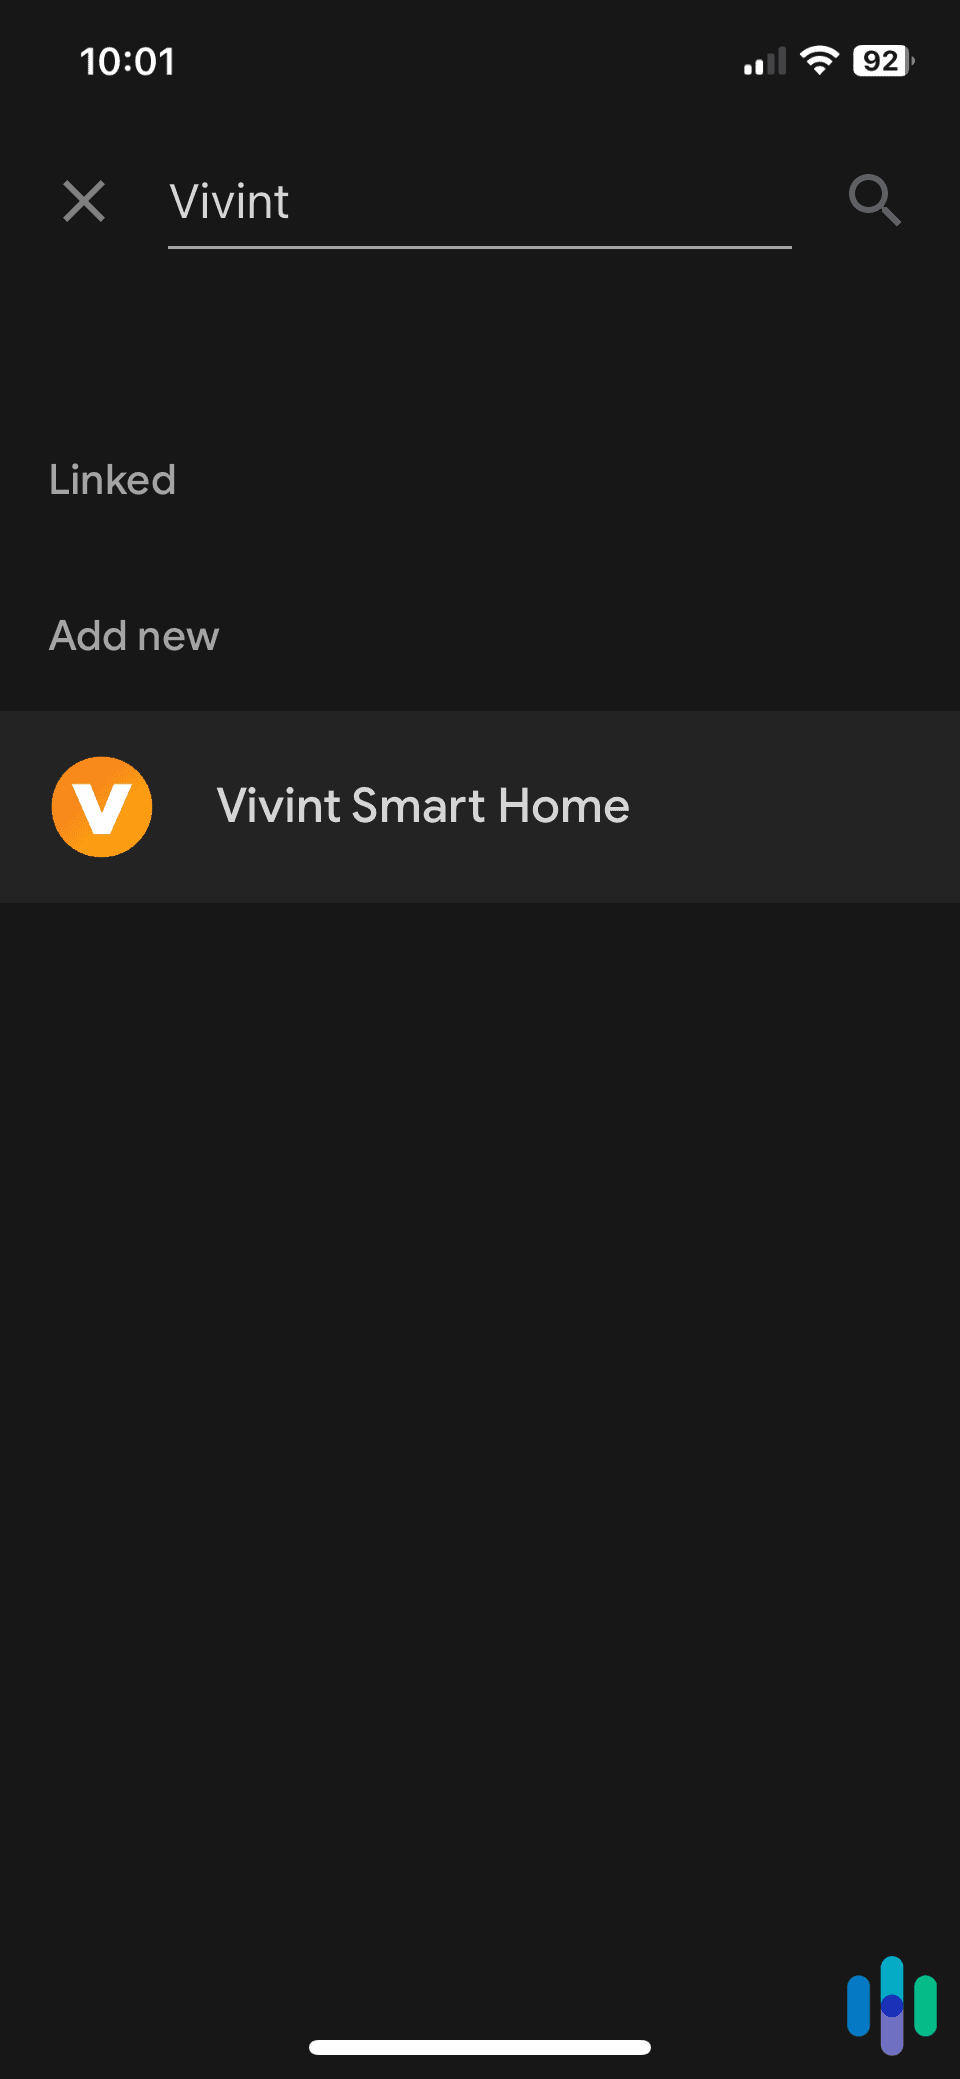 Adding Vivint to the Google Home app